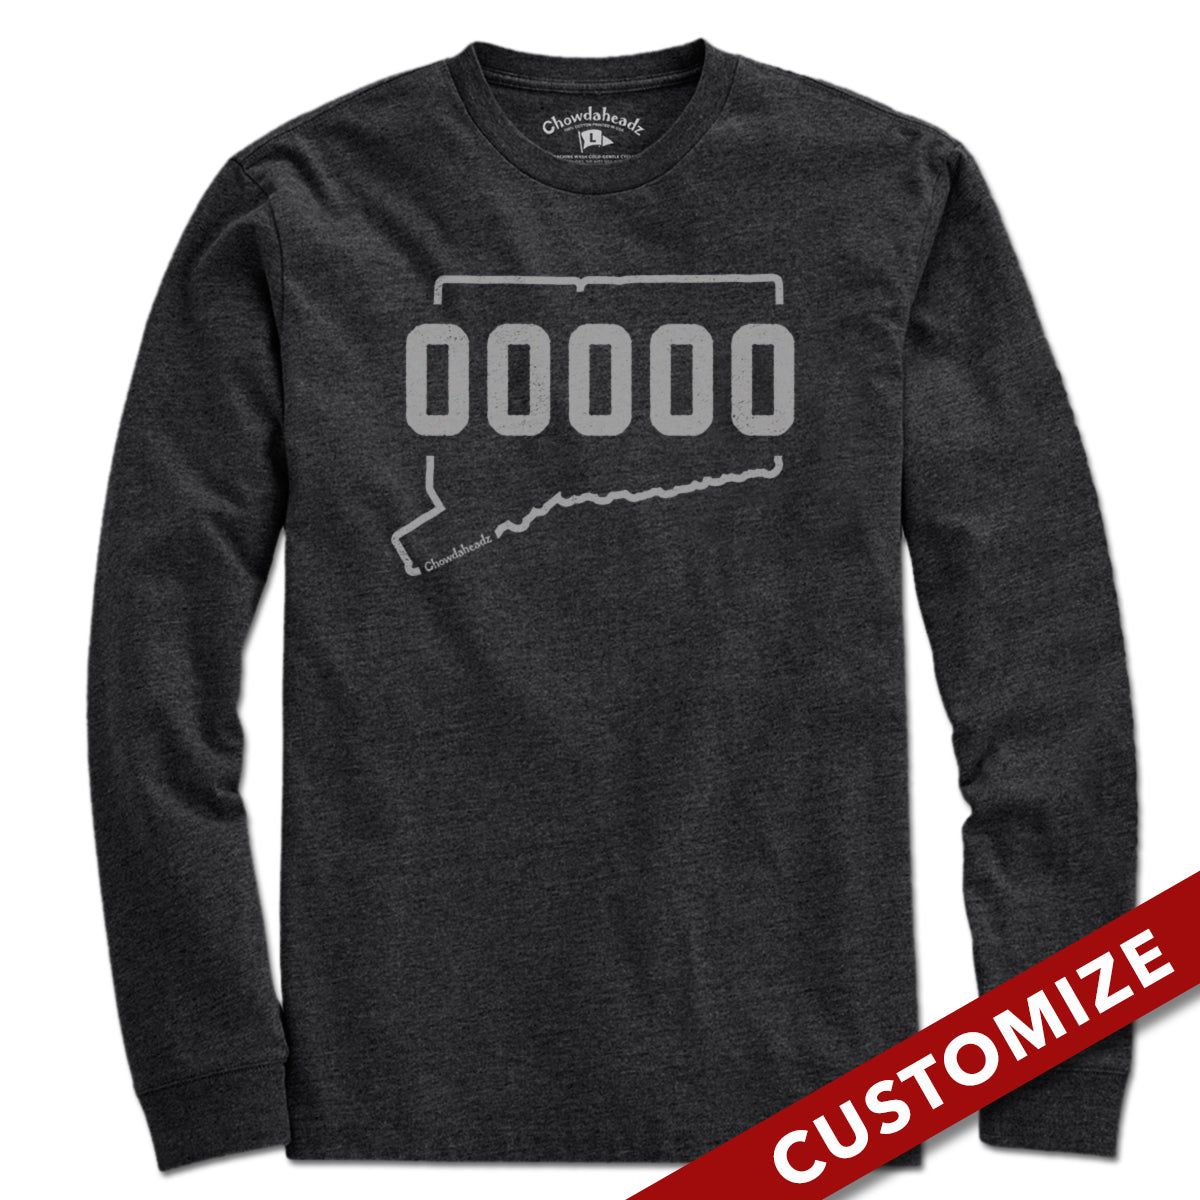 Custom Connecticut Zip Code T-Shirt - Chowdaheadz